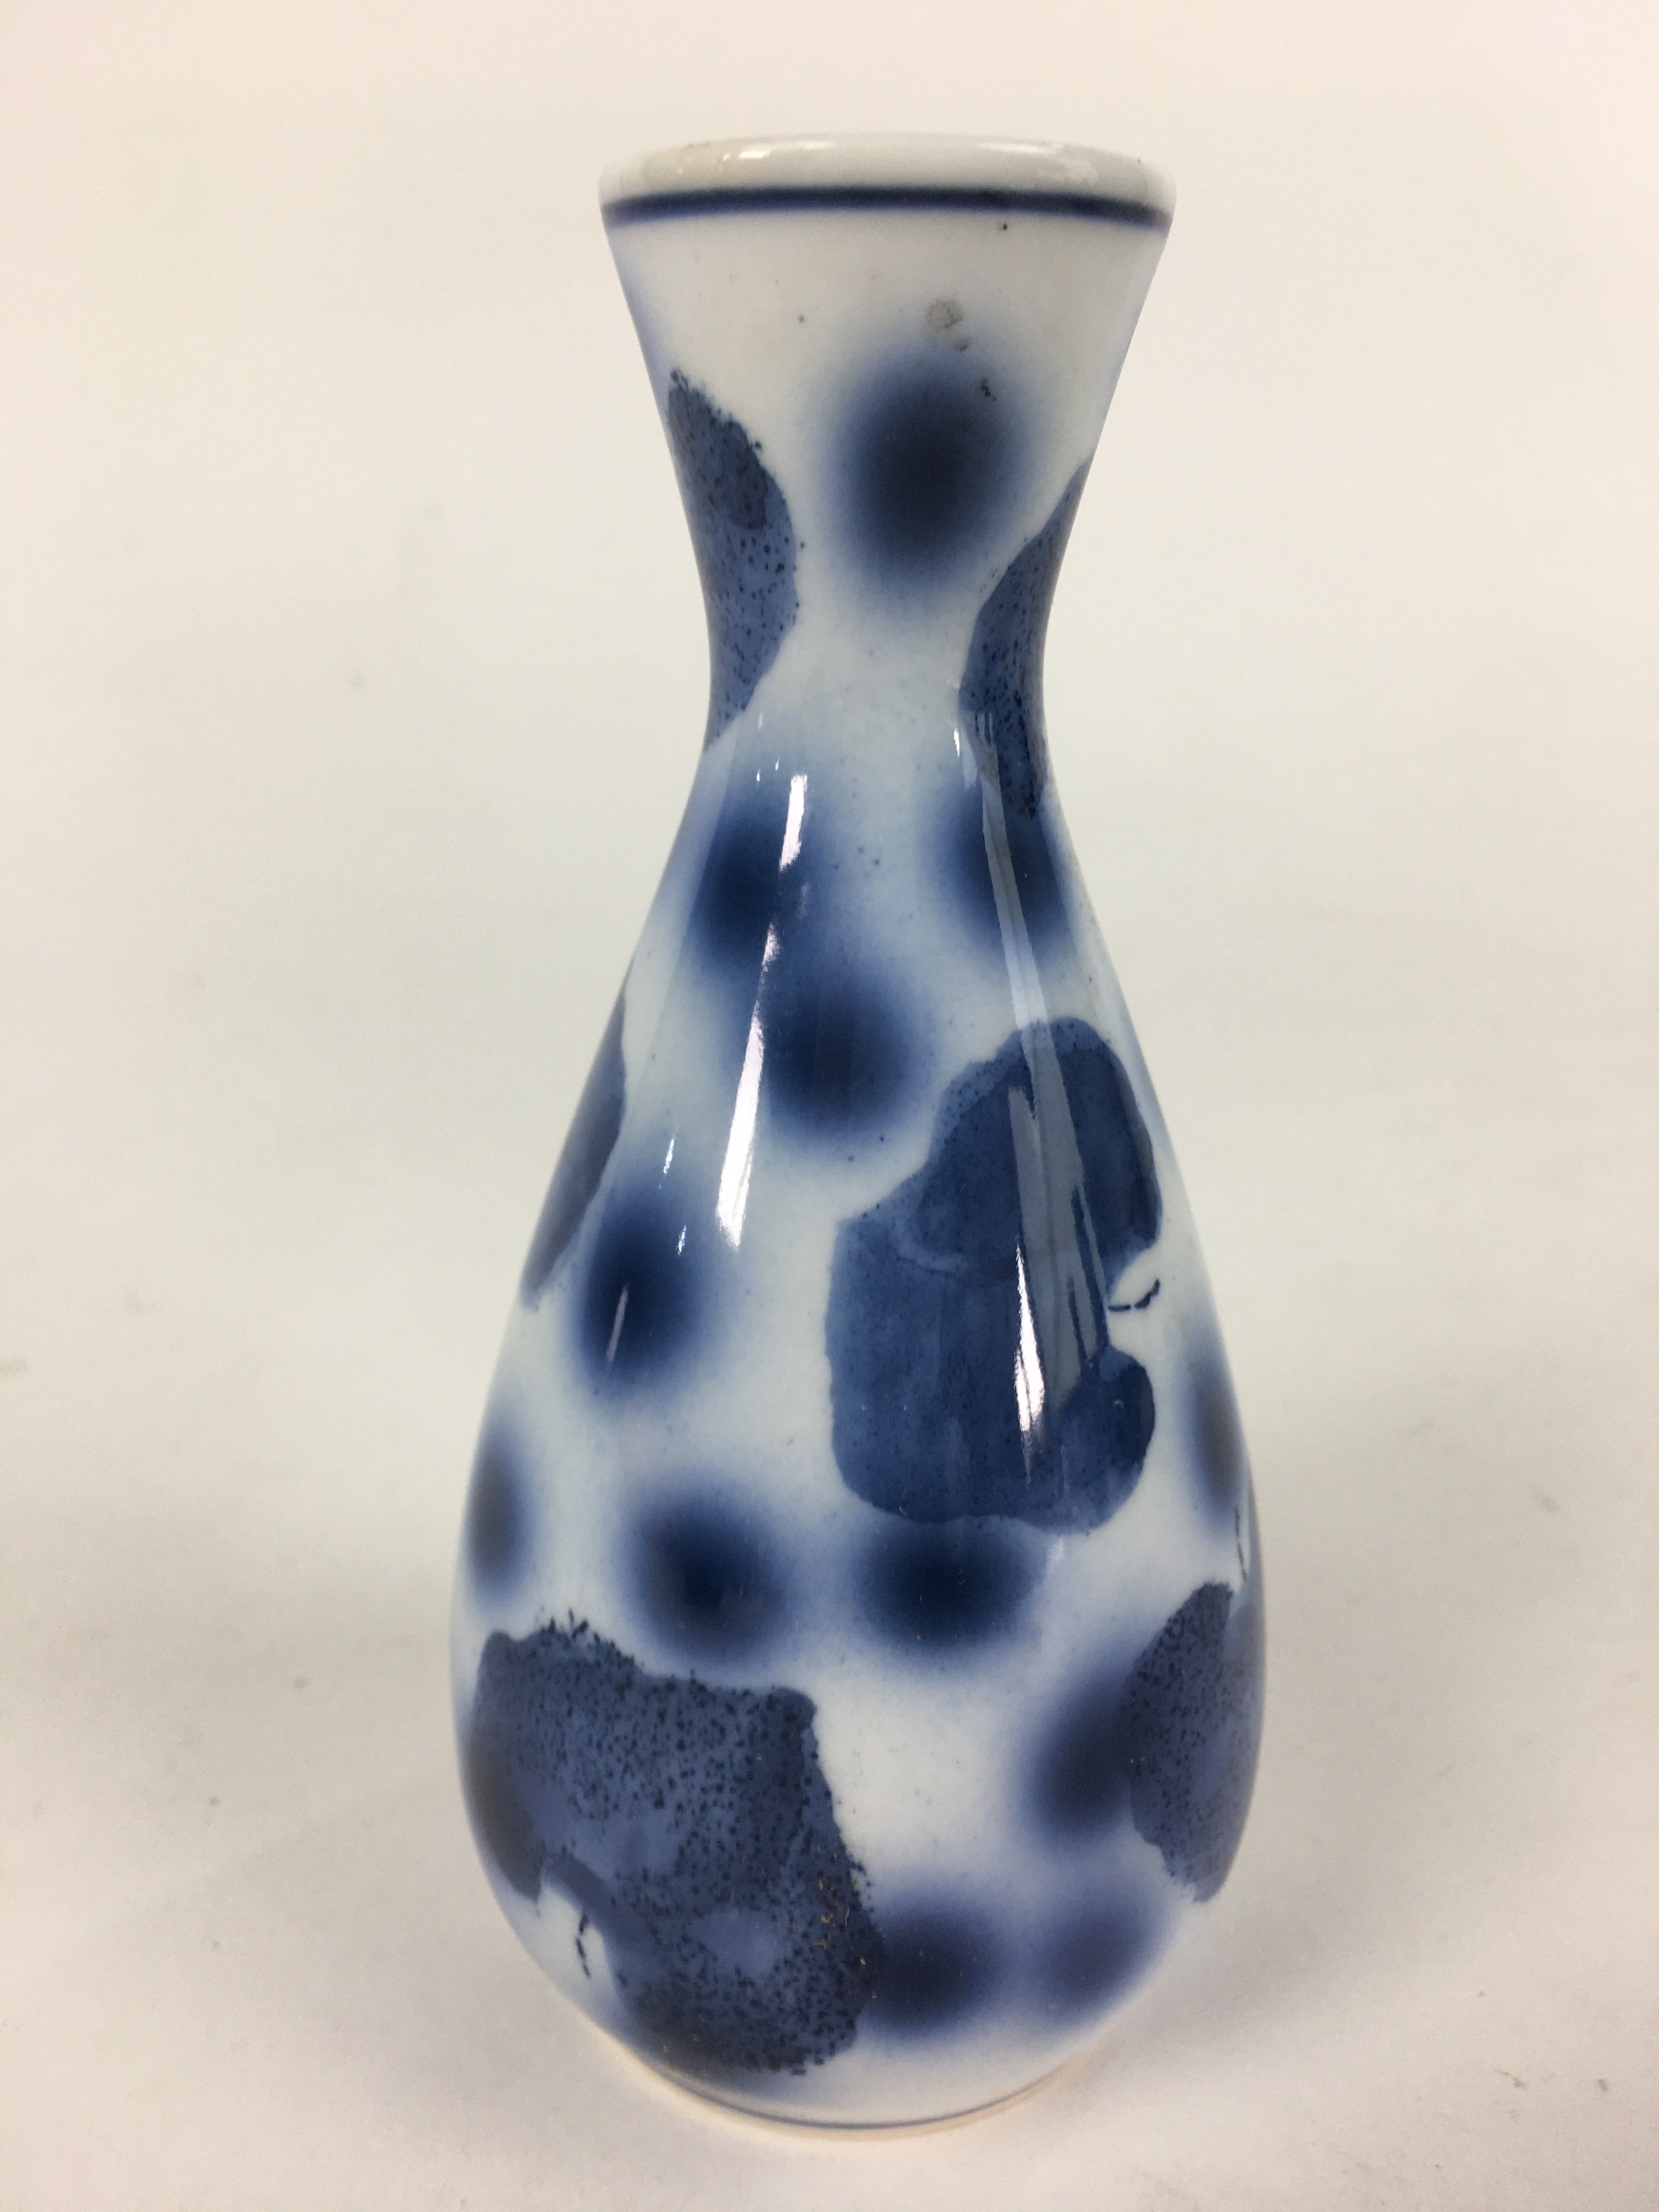 Japanese Porcelain Sake Bottle Vtg Blue Leaf Pattern Design Tokkuri TS380